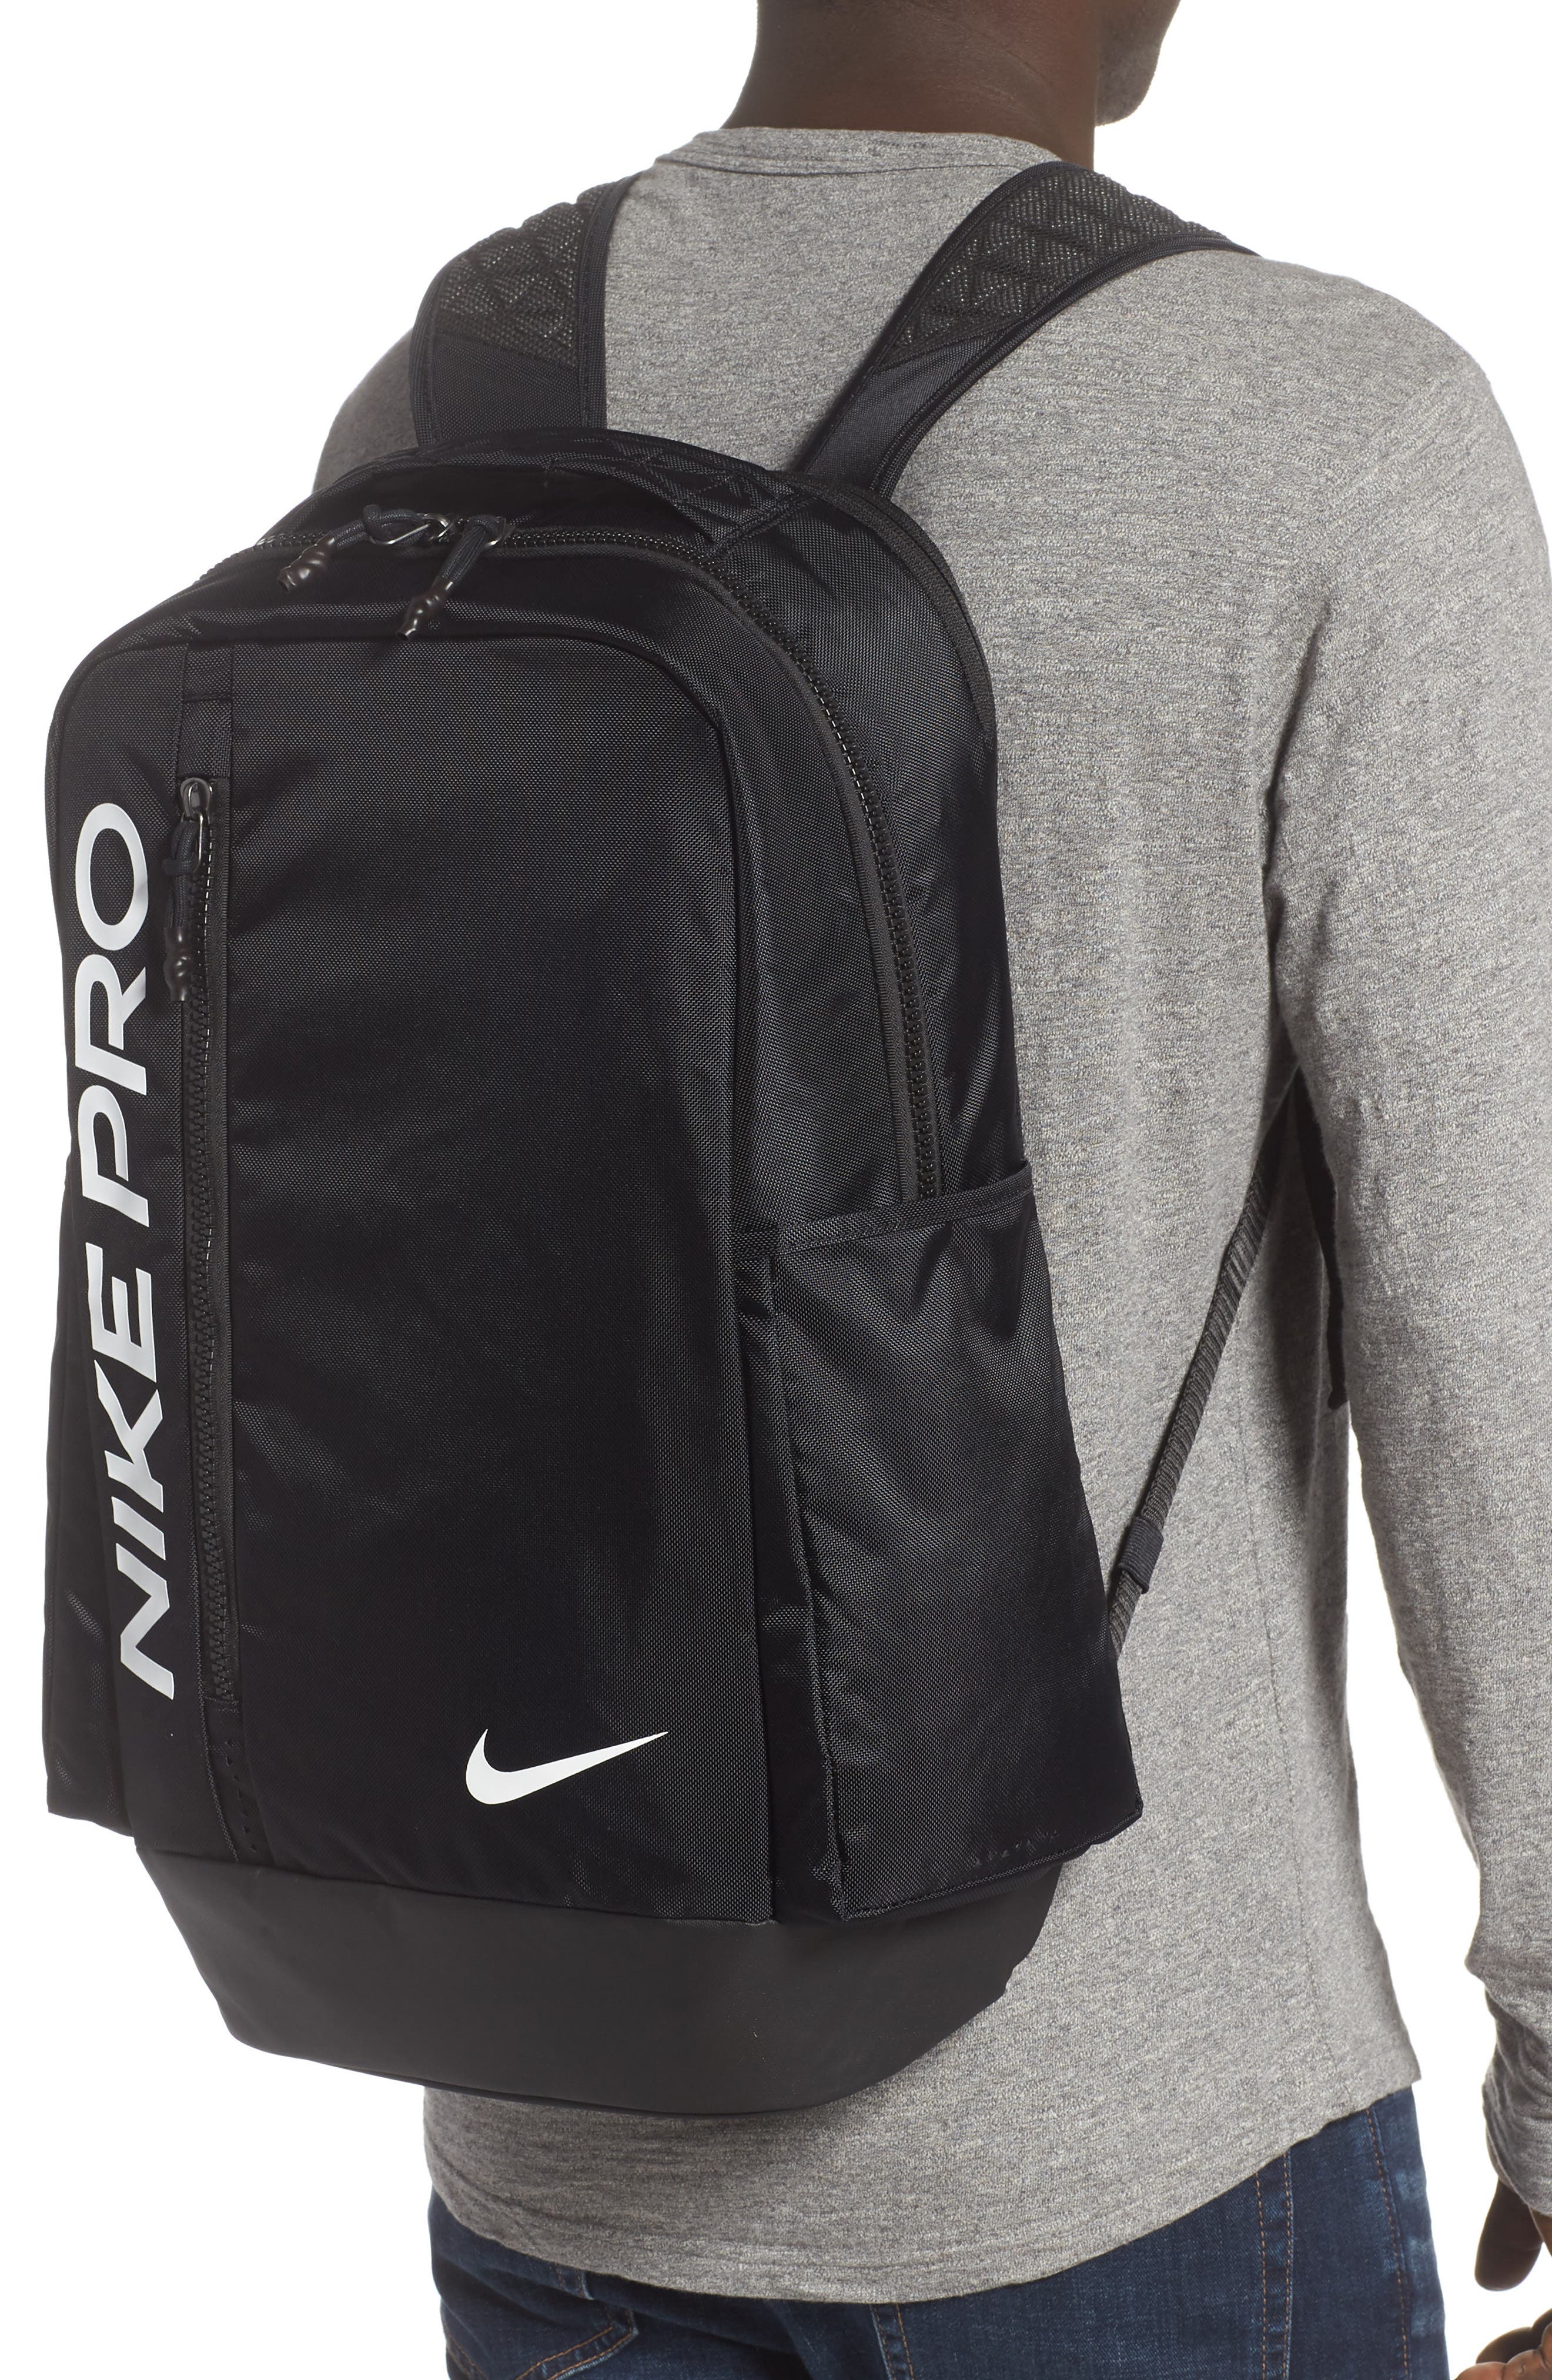 nike vapor power 2.0 backpack review